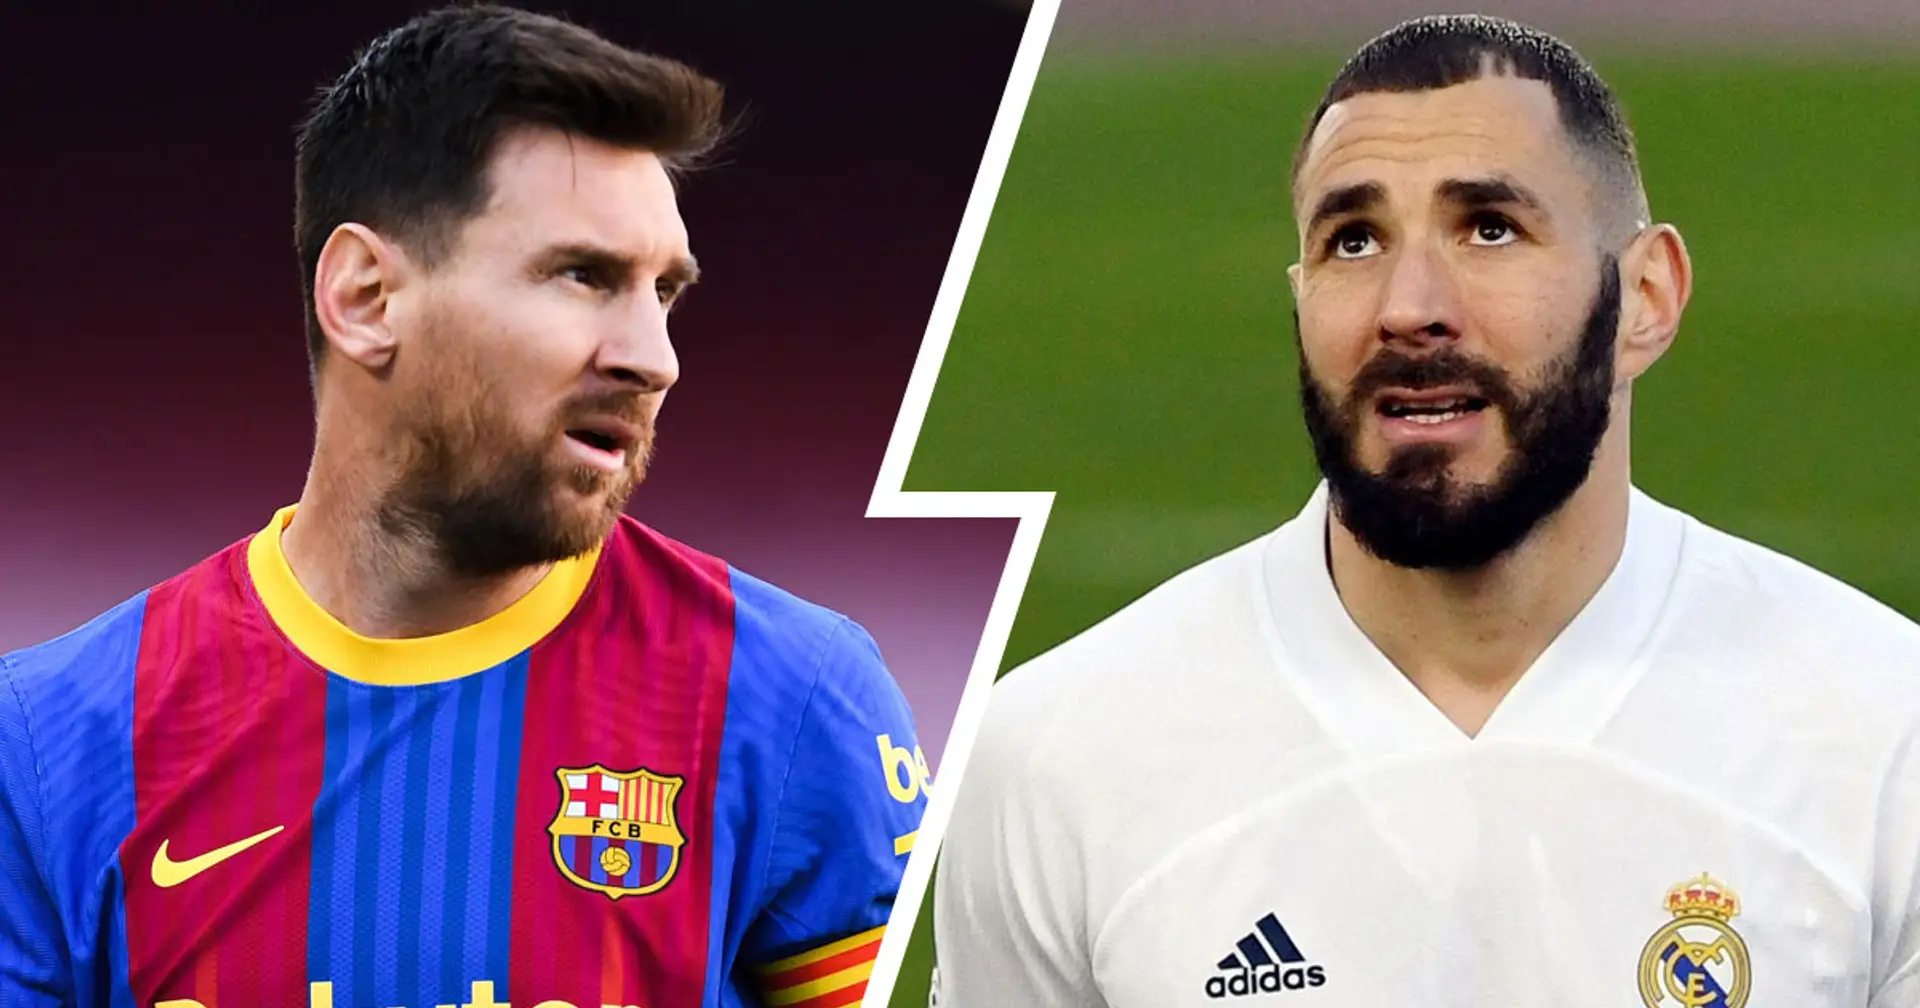 Clash of .. titans? Stats show huge gap between Messi and Benzema